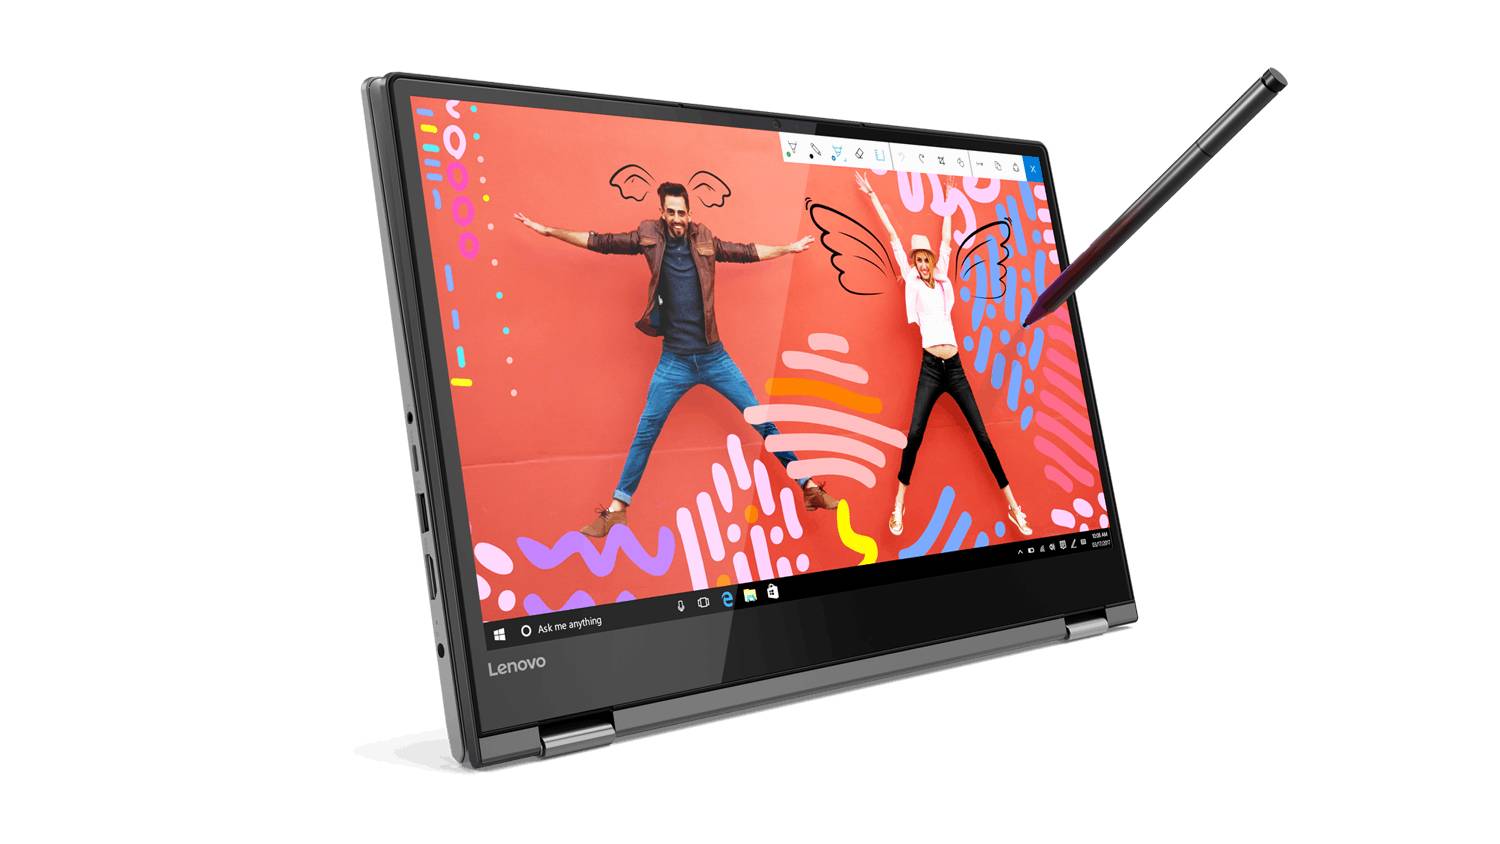 Pantalla del Lenovo Yoga 530 con stylus